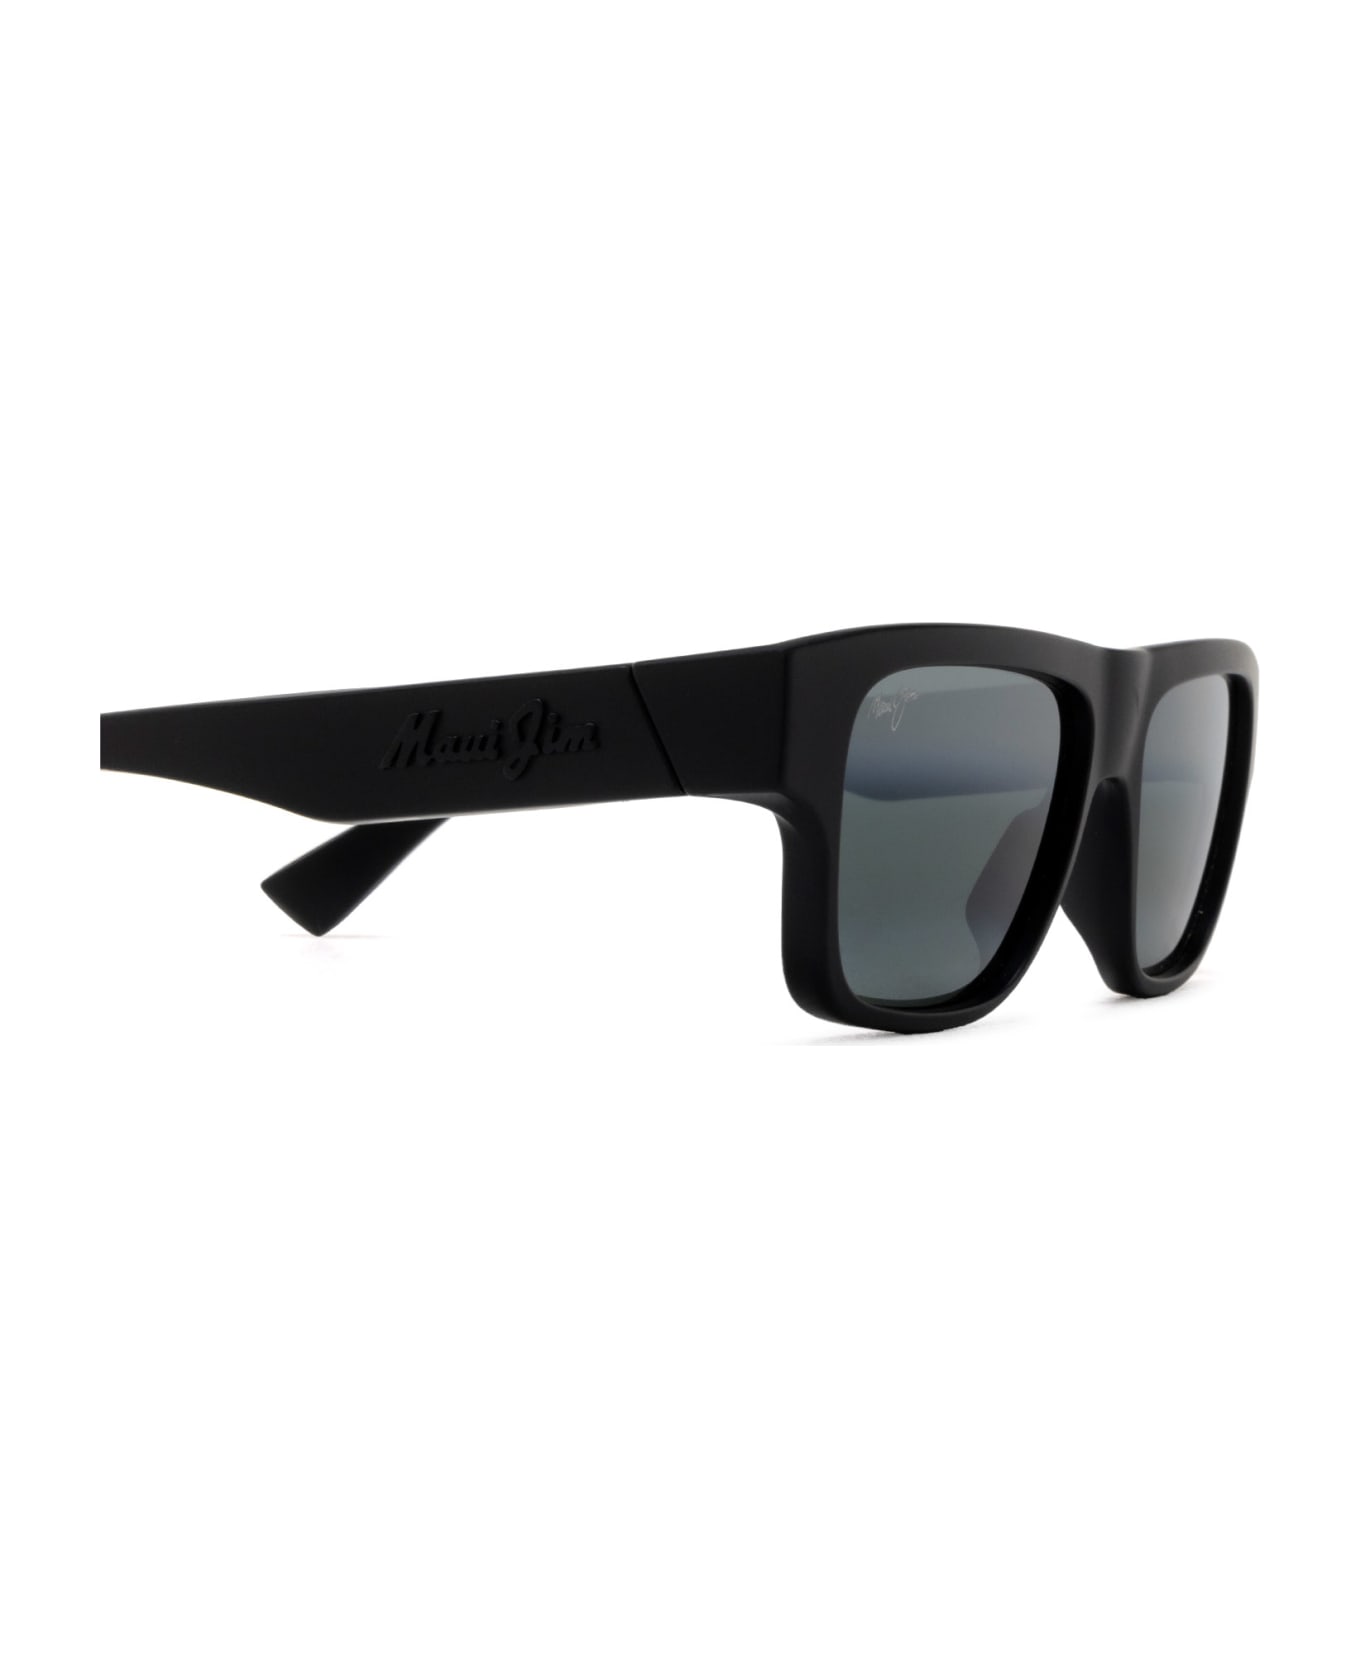 Maui Jim Mj638 Matte Black Sunglasses - Matte Black サングラス